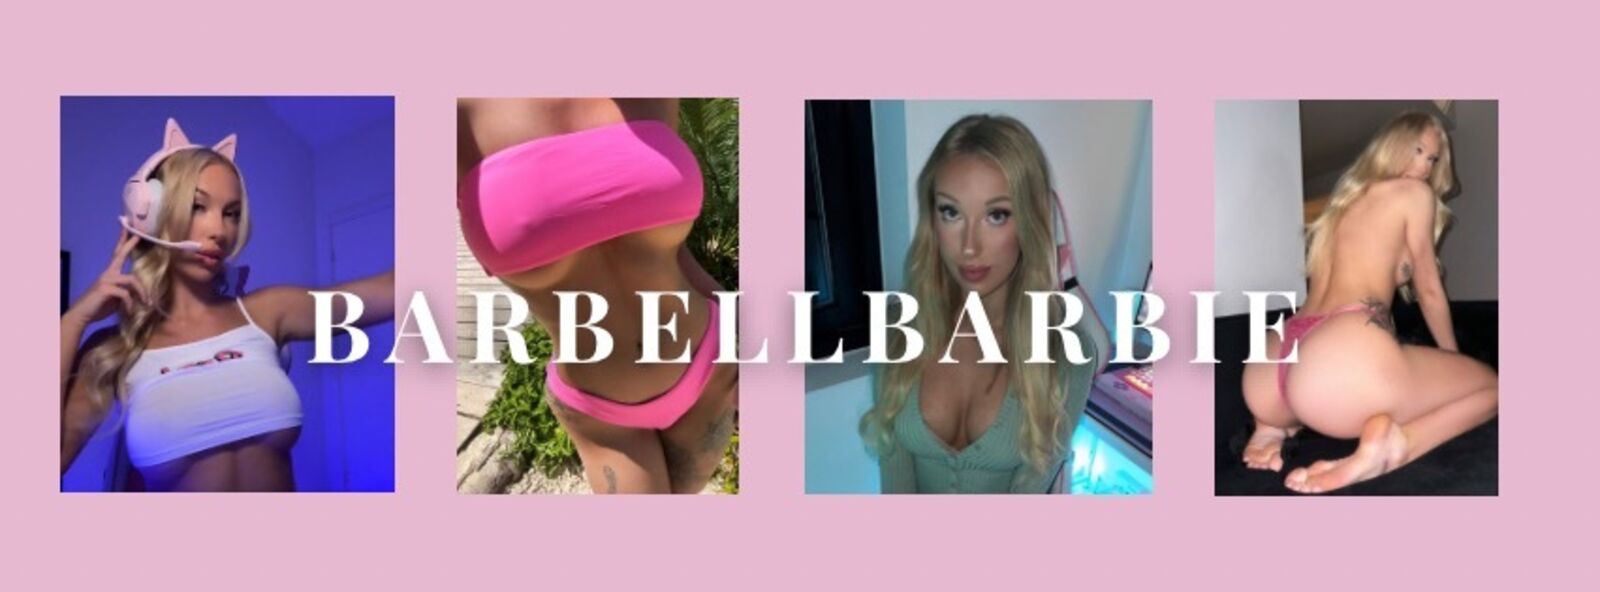 See Barbell Barbie profile